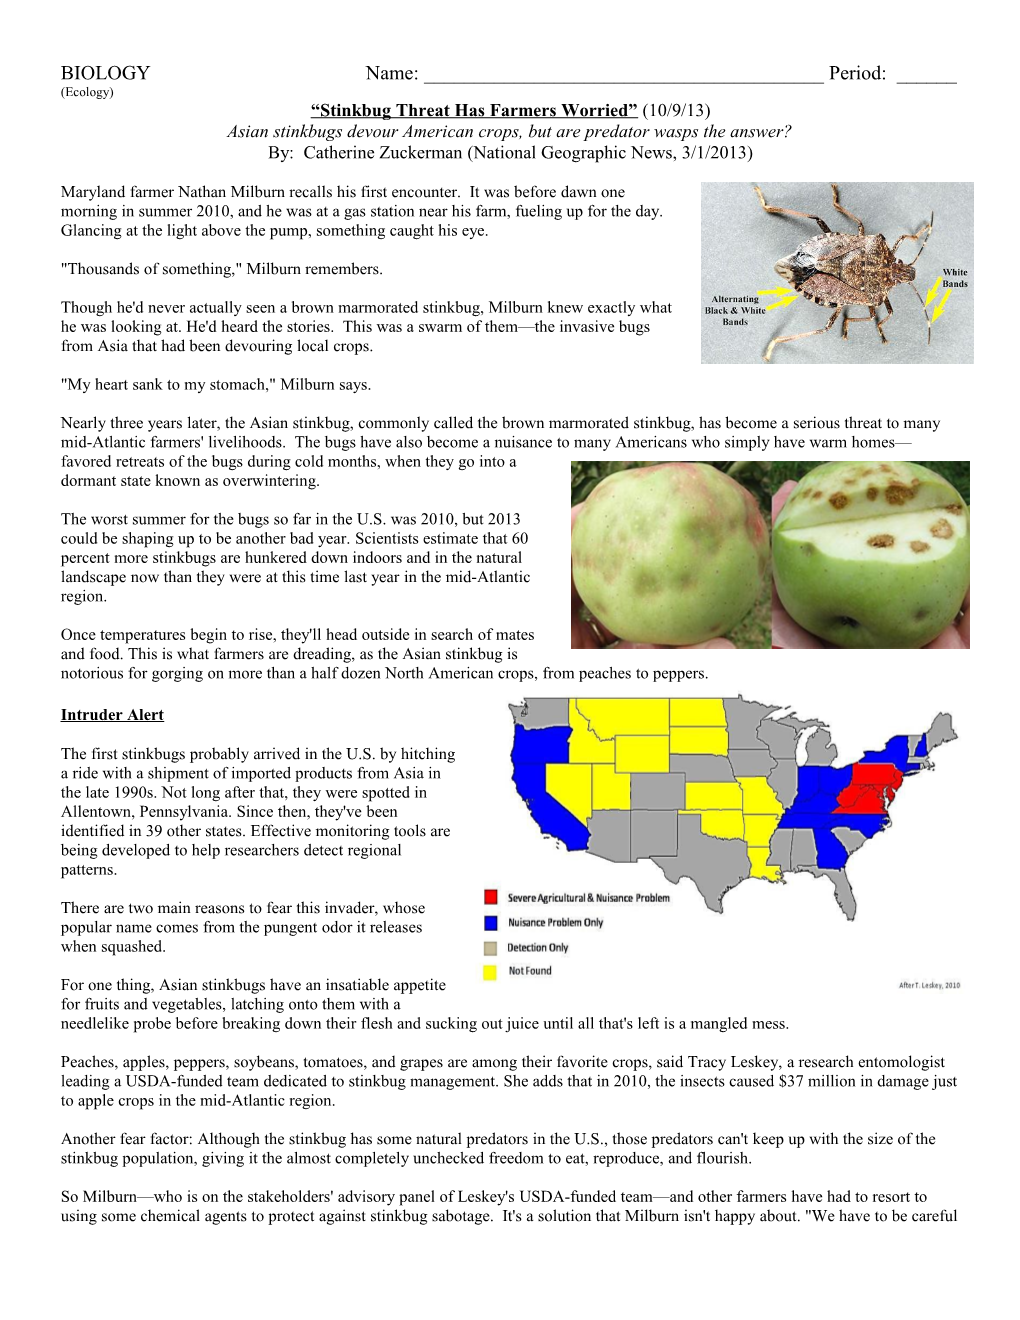 Stinkbug Threat Has Farmers Worried (10/9/13)